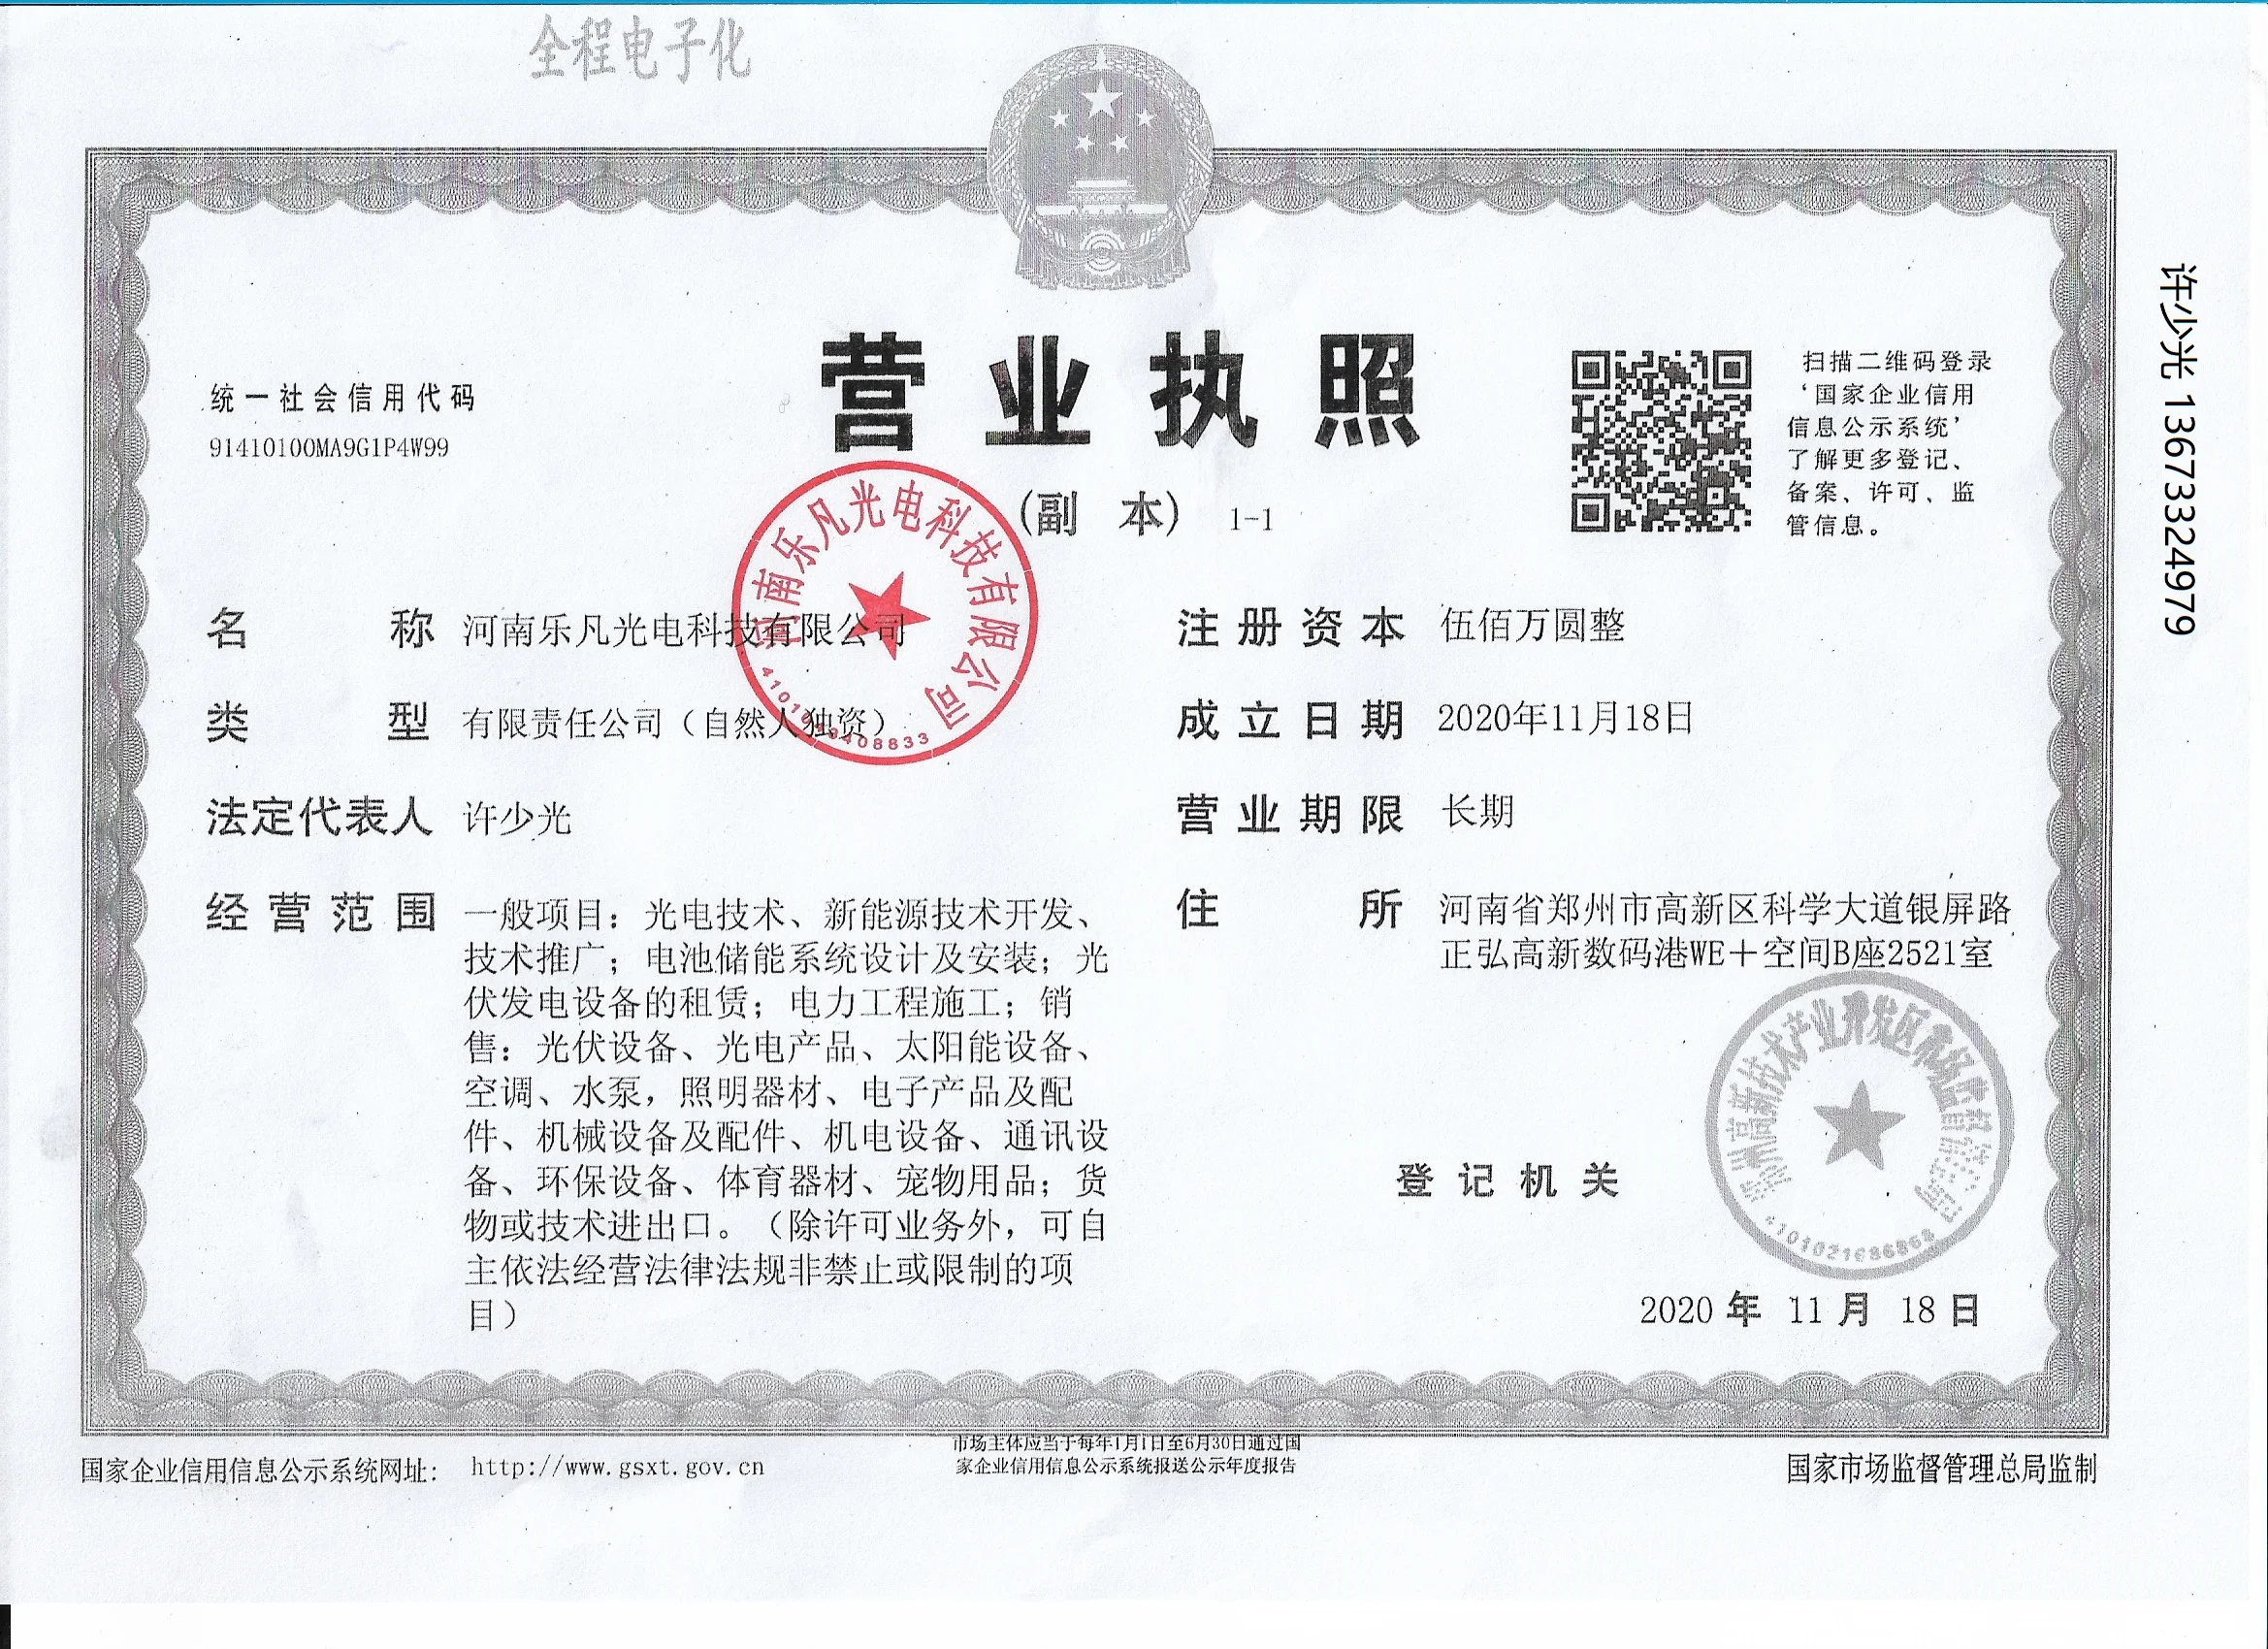 Company Overview - Henan Livefun Solar Tech Co., Ltd.